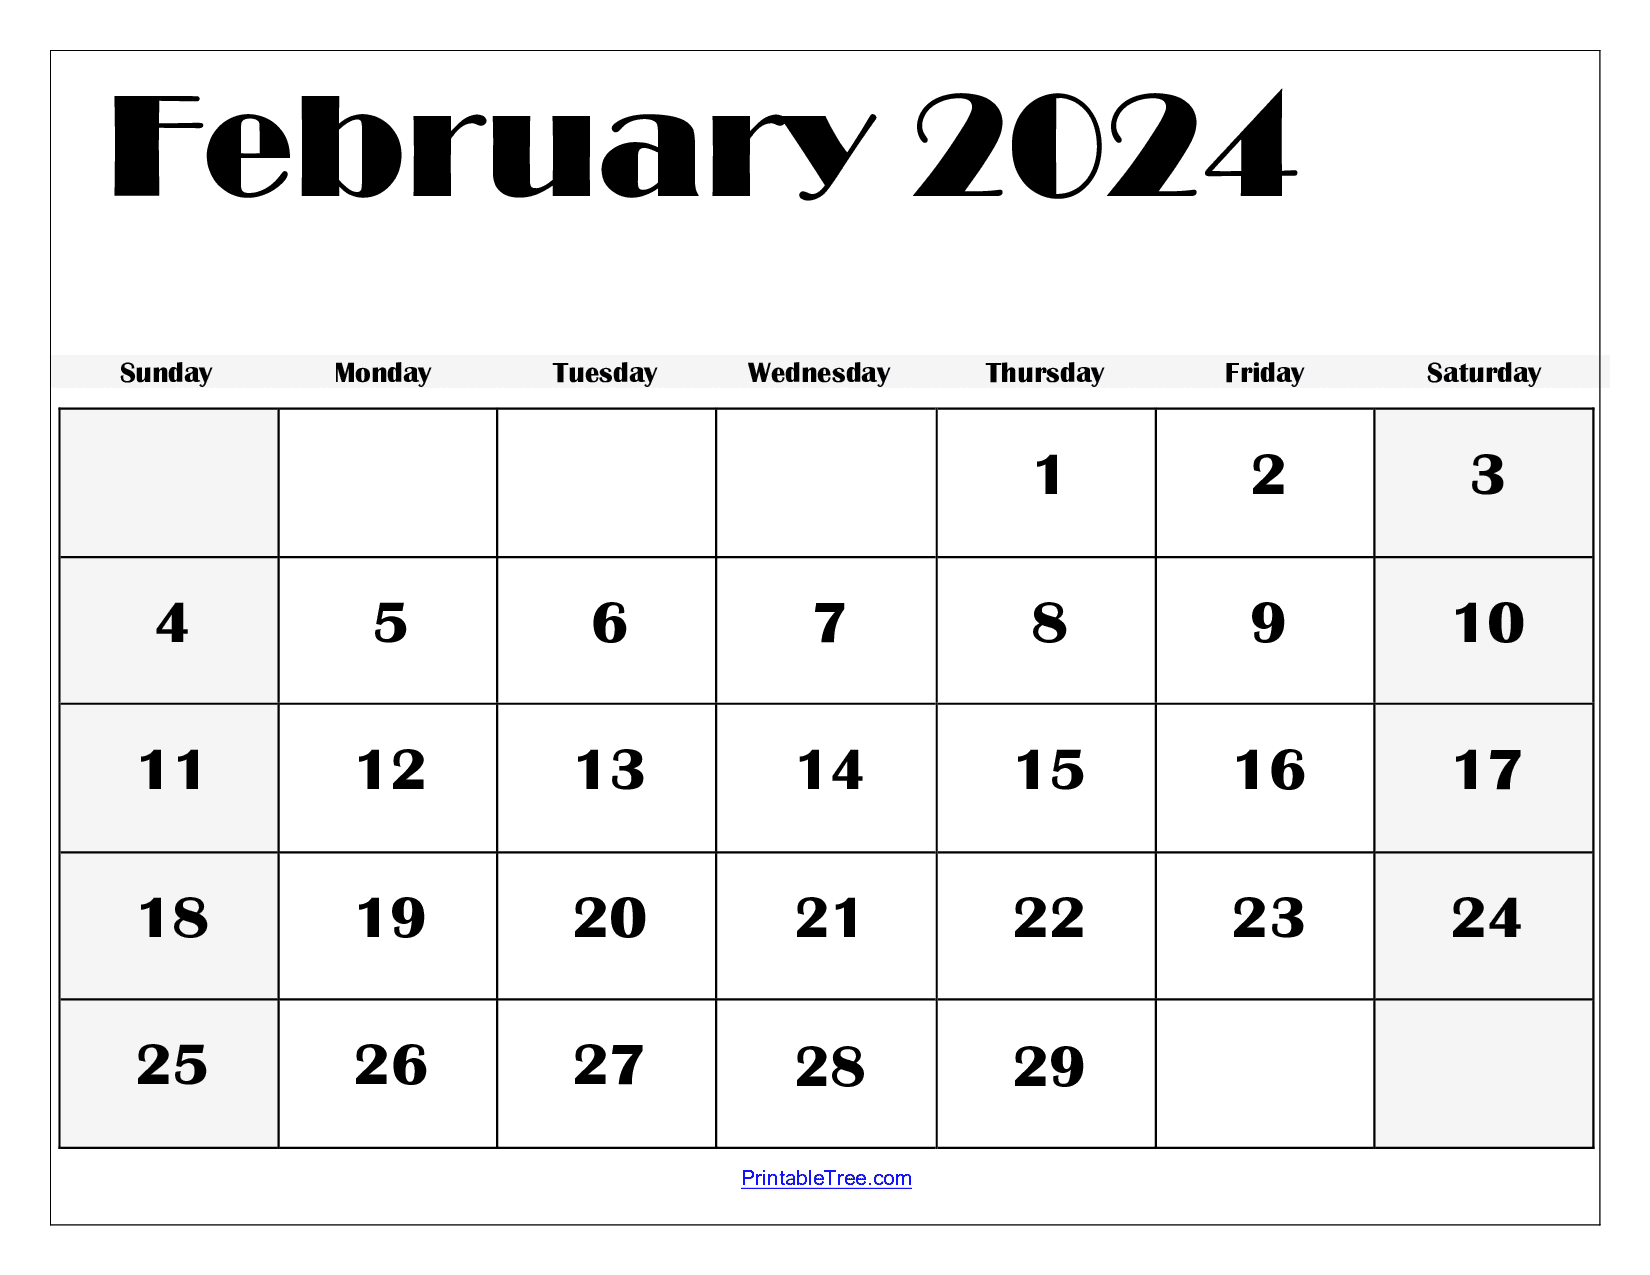 February 2024 Calendar Printable Pdf Template With Holidays for Printable 2024 Feb Calendar